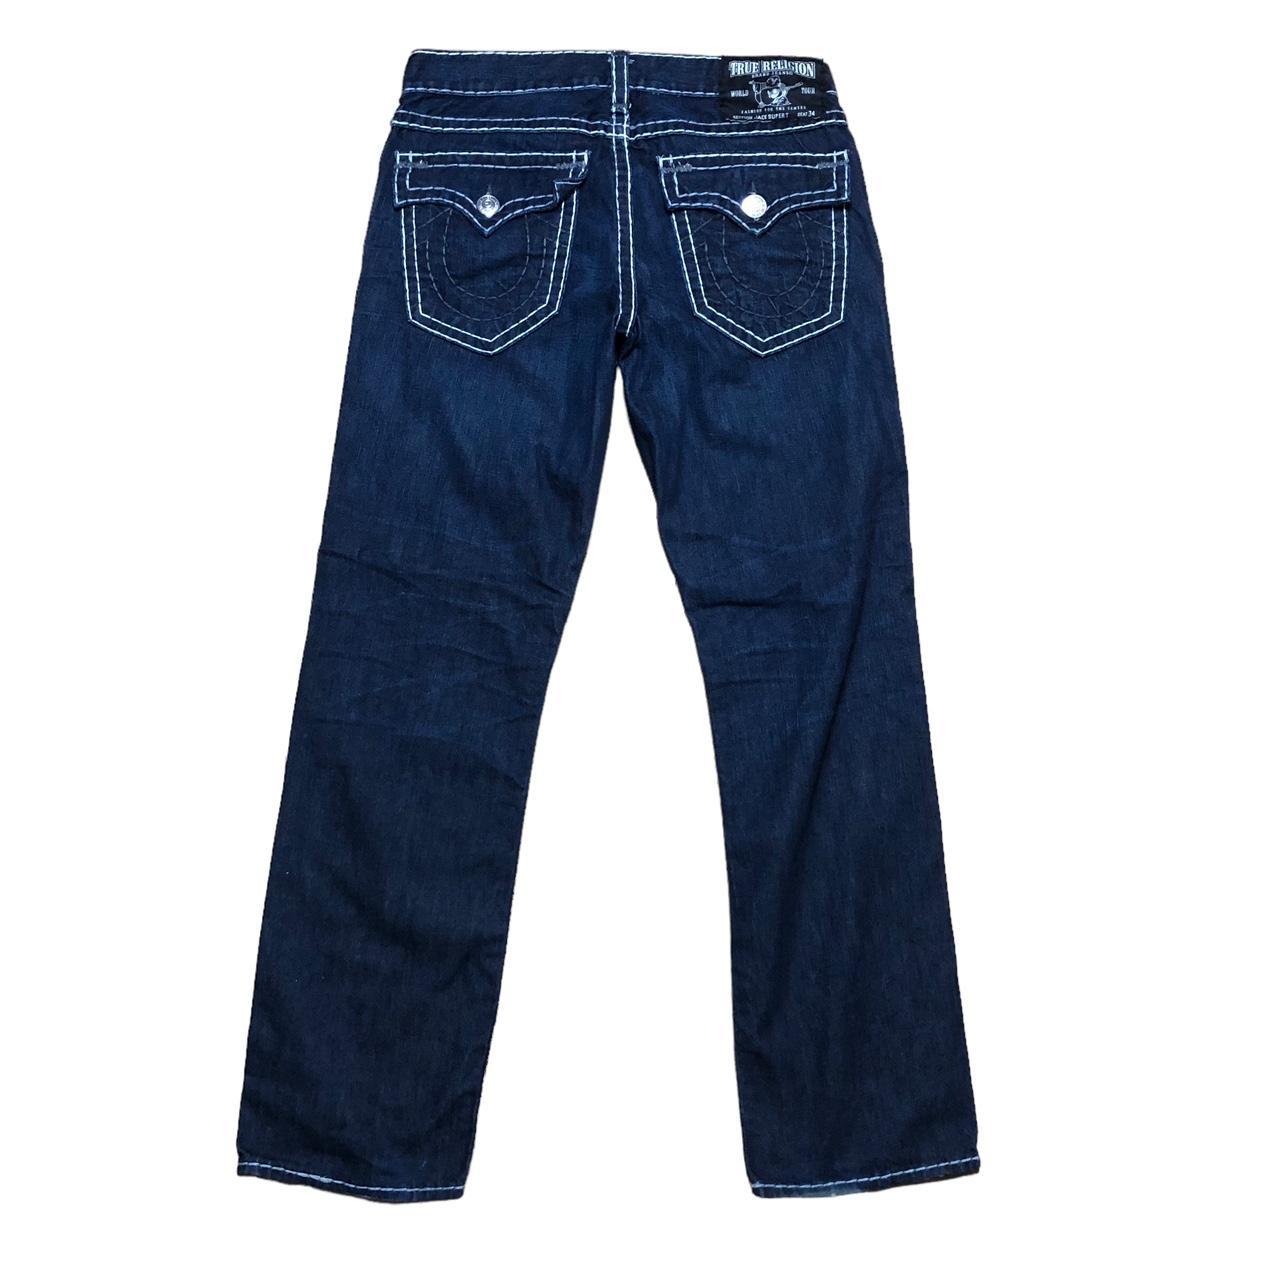 Ture Religion Stitch Jeans Brand: Ture... - Depop